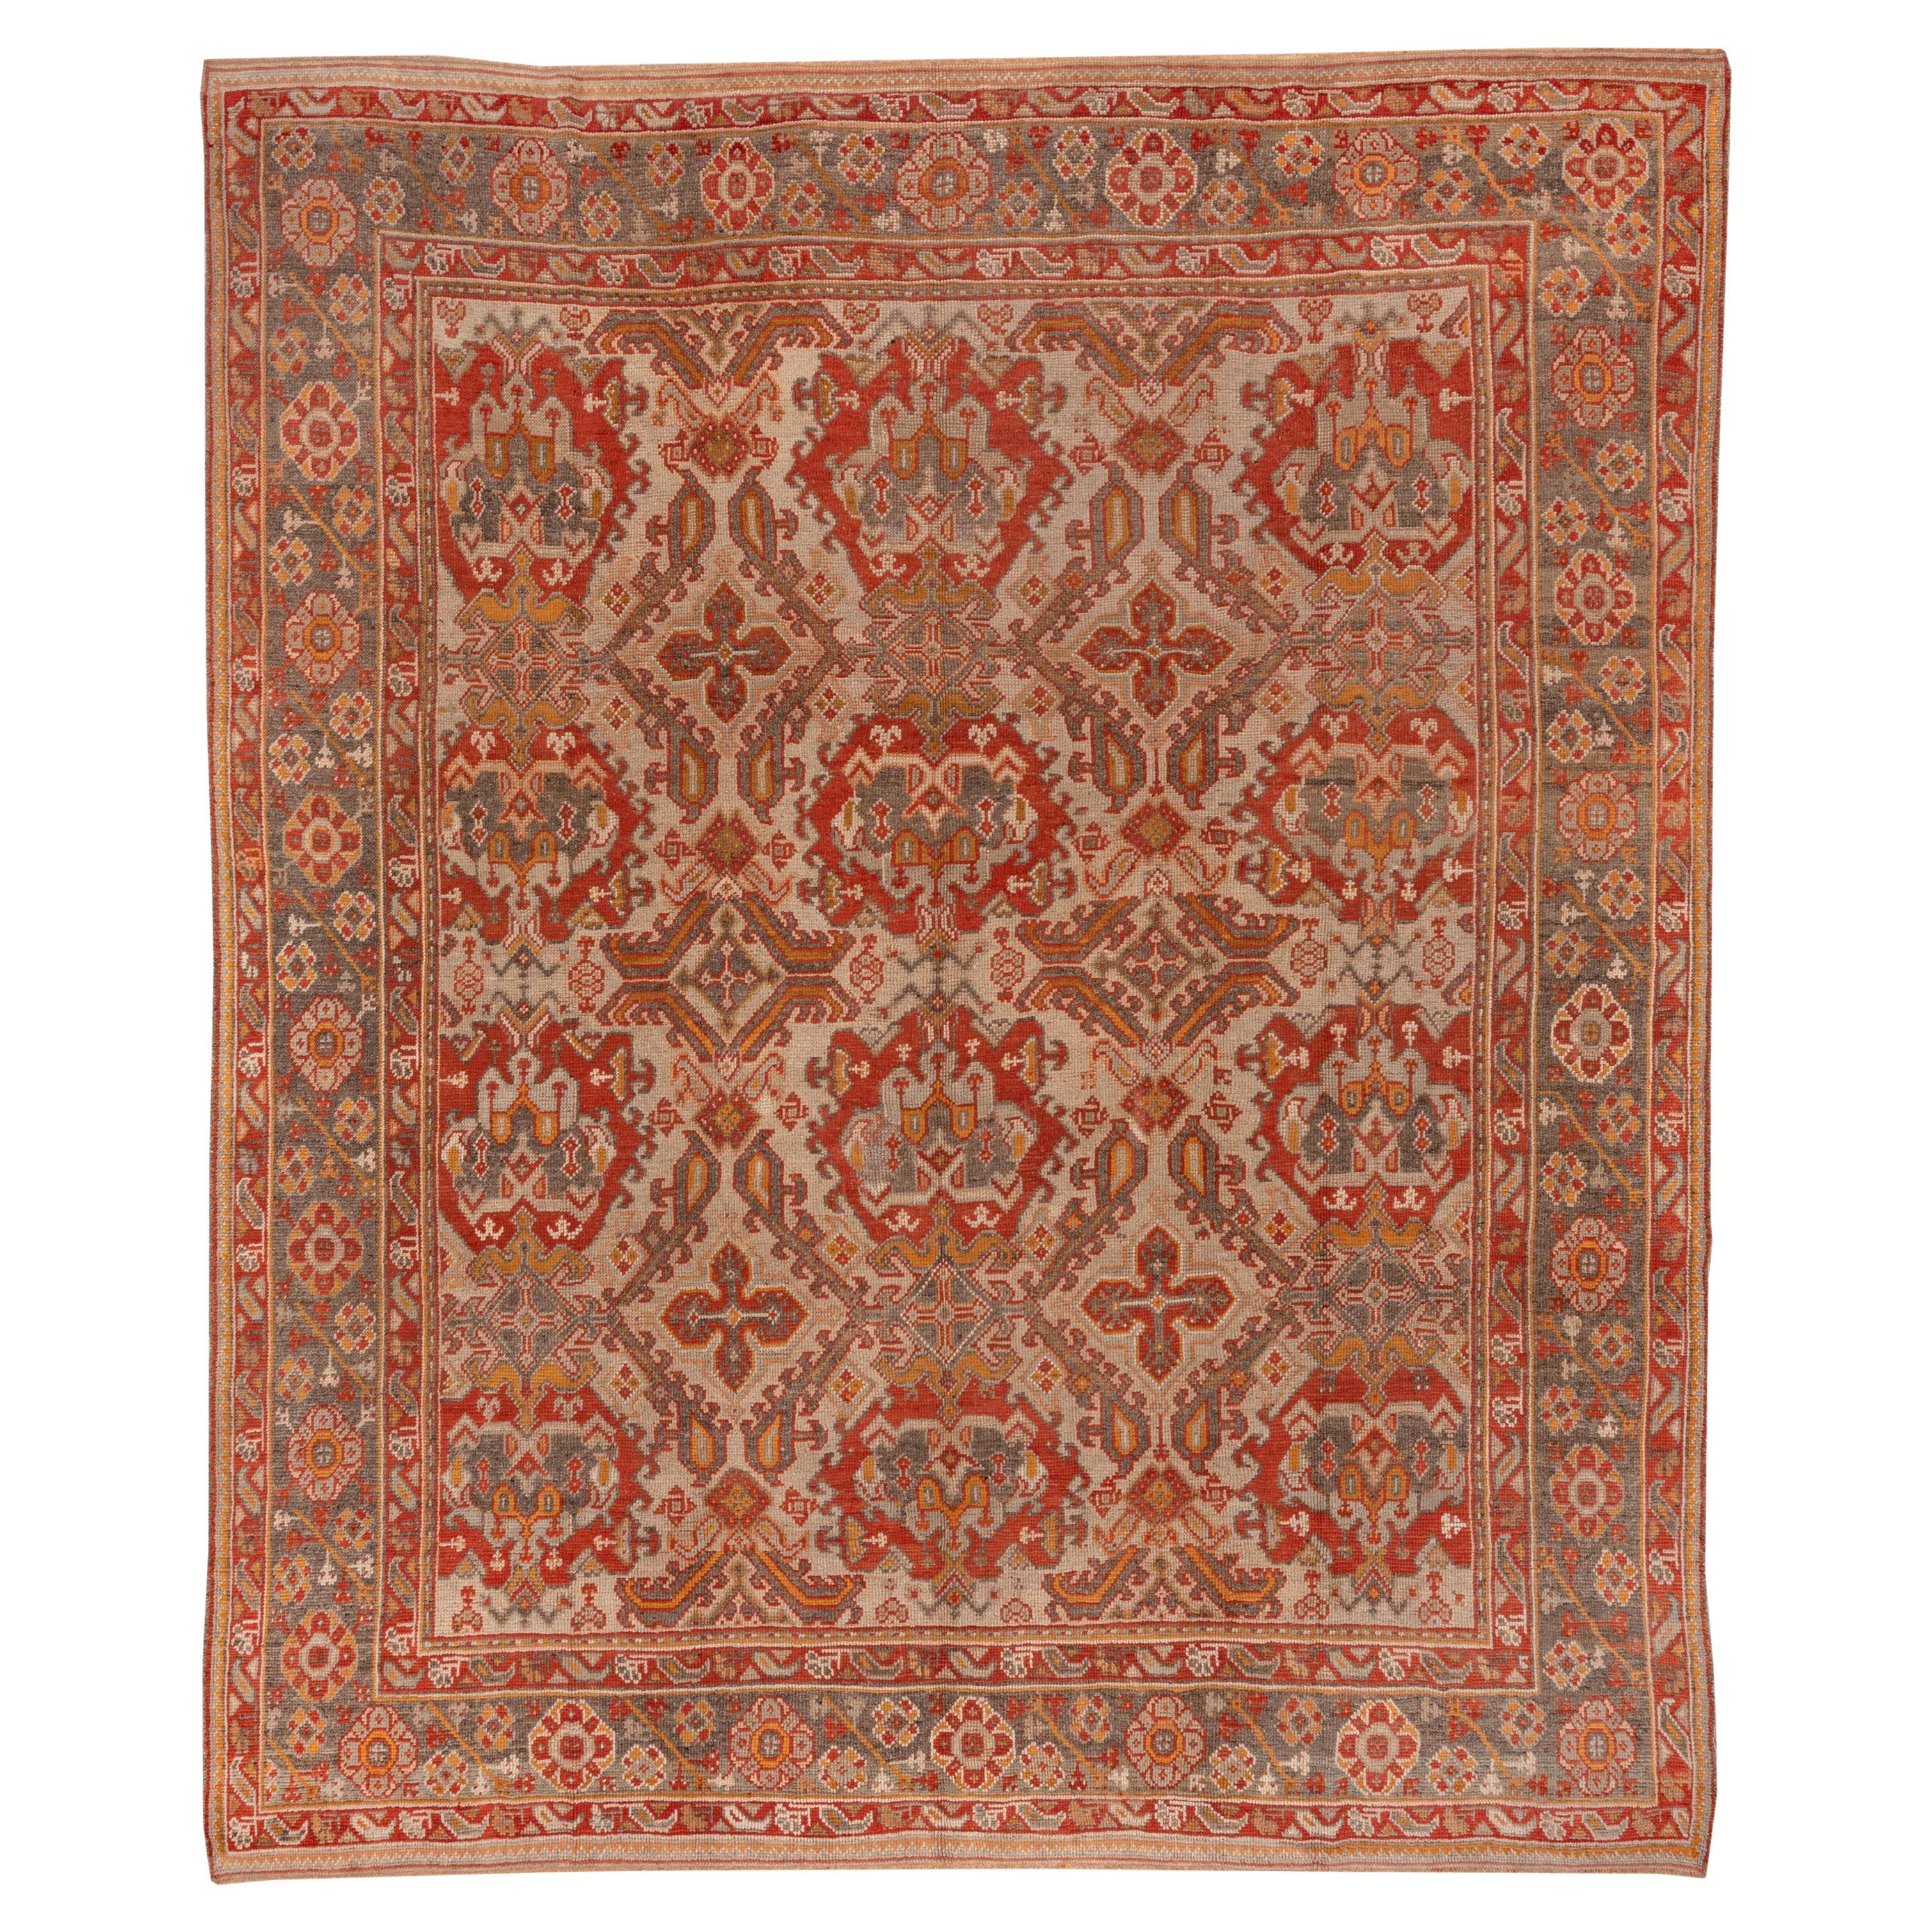 Antique Colorful Turkish Oushak Carpet, Allover Field, Colorful Palette